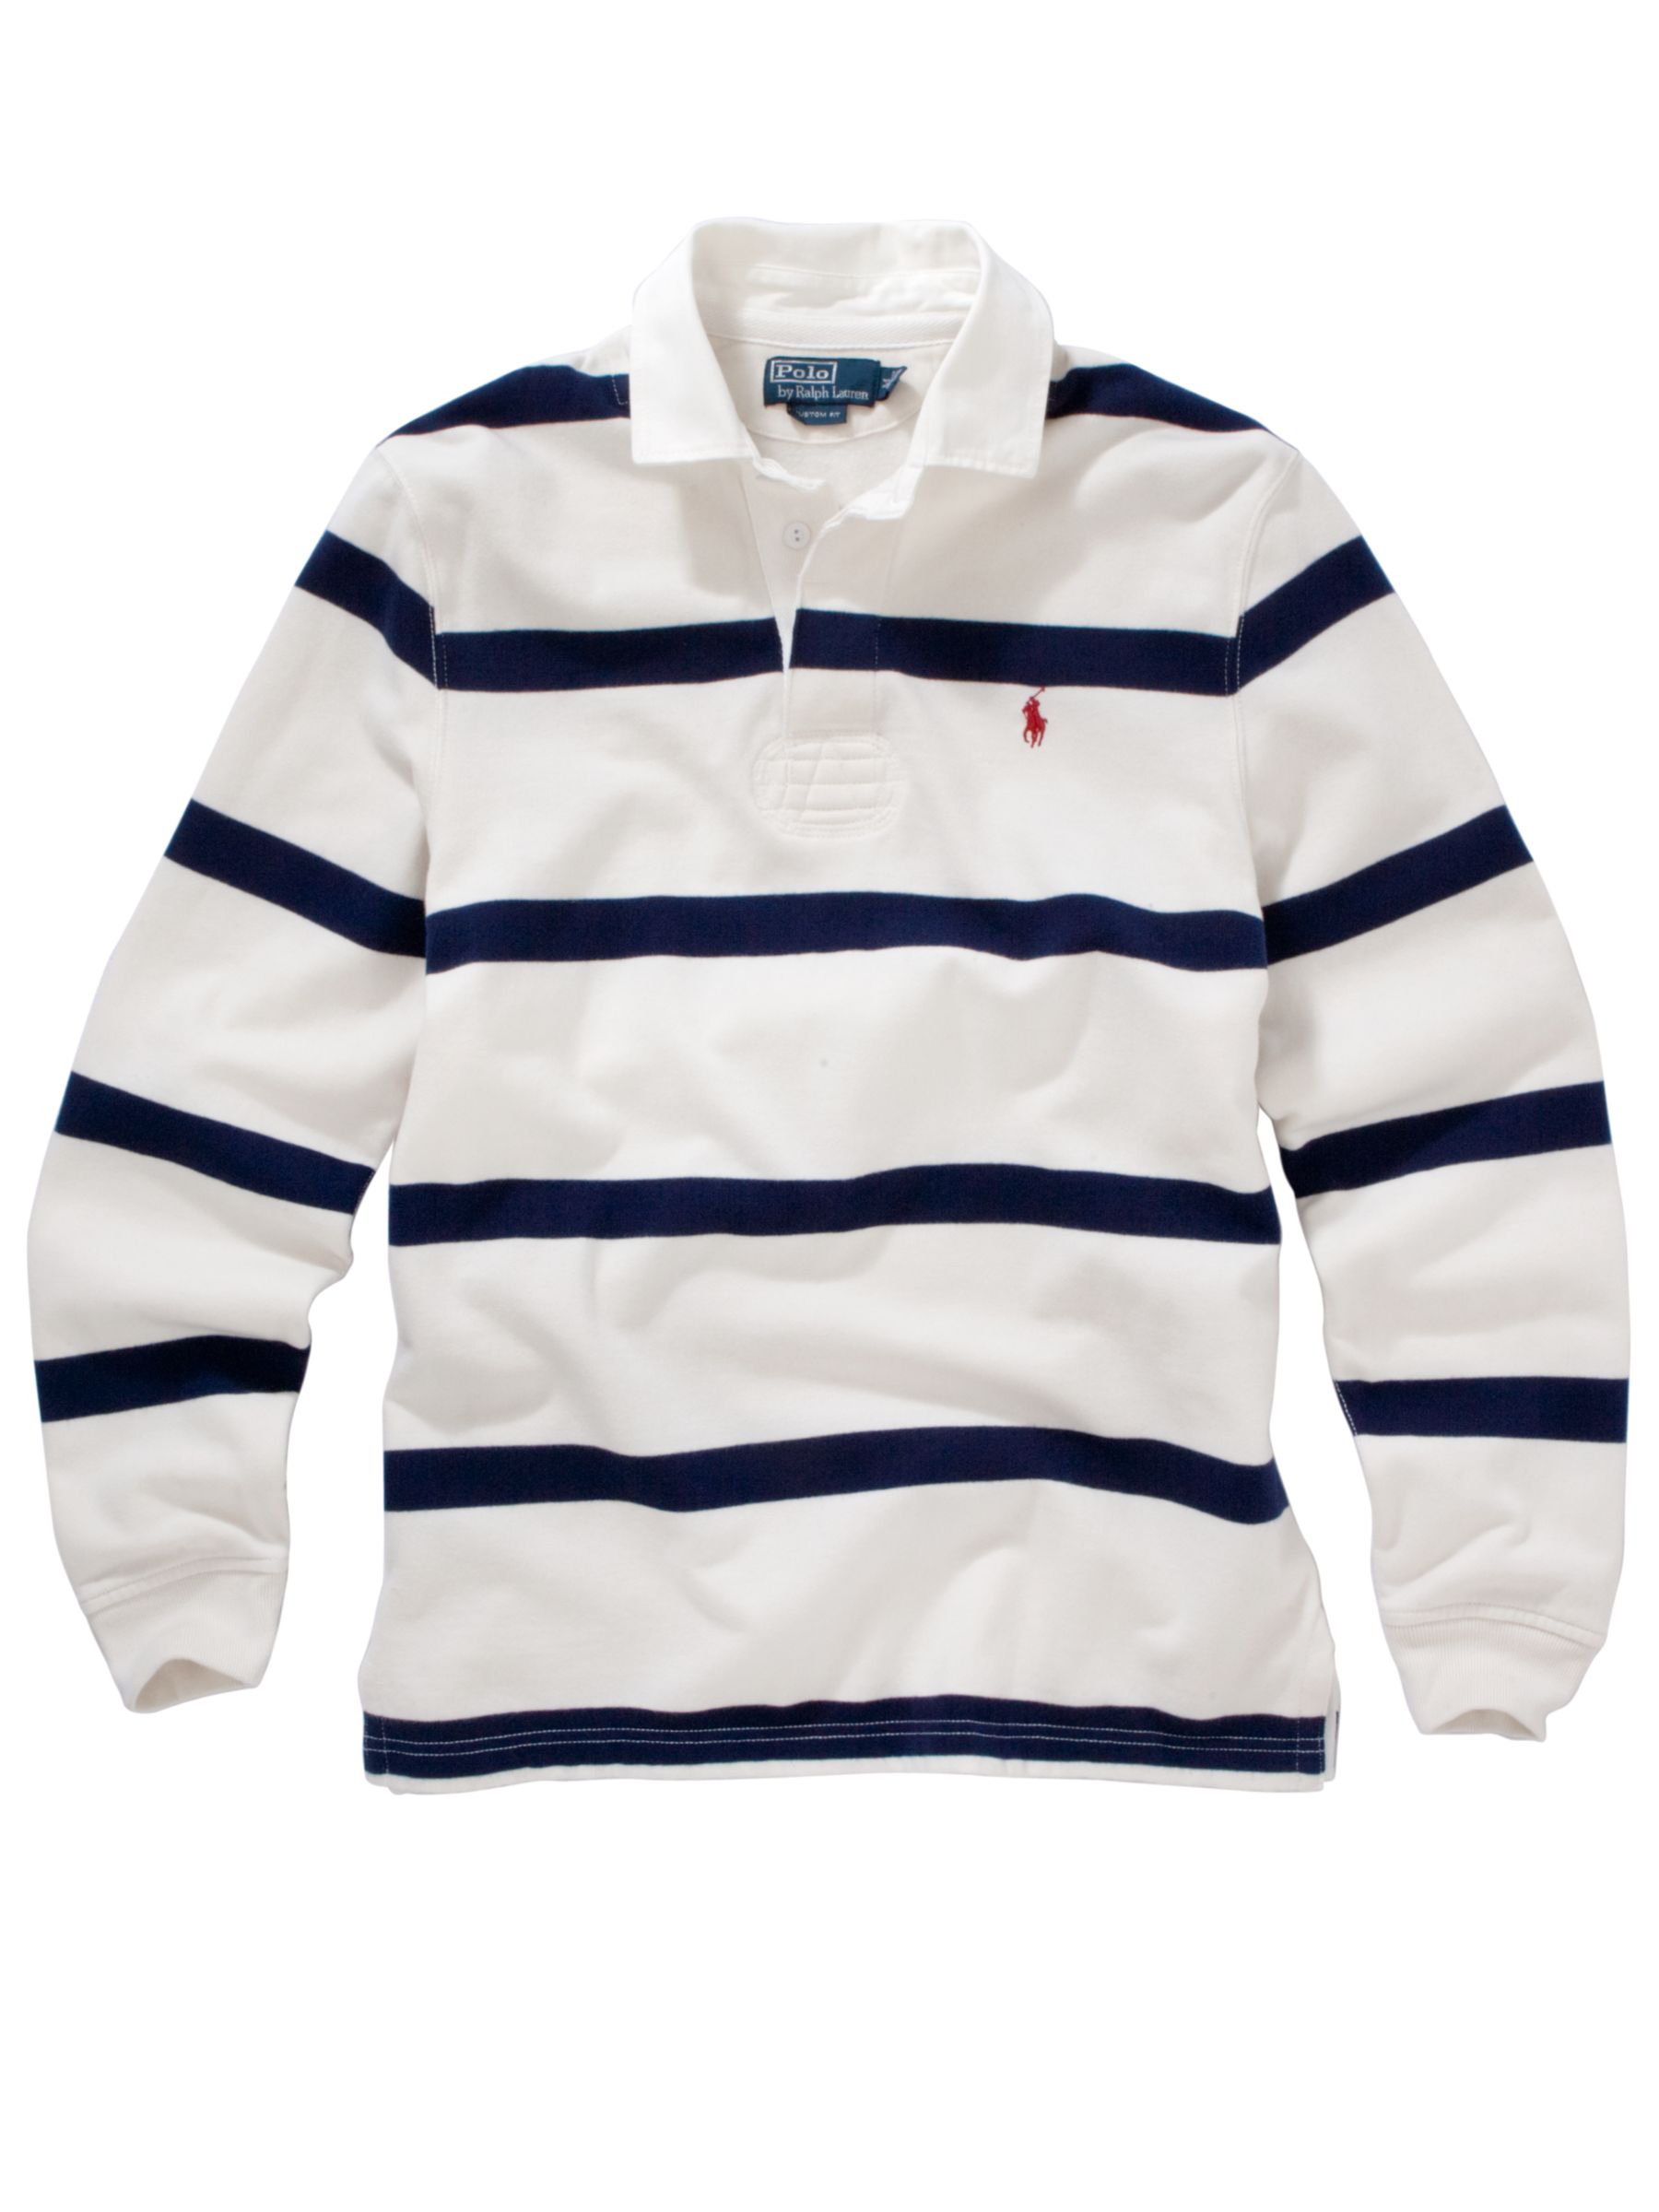 Ralph Lauren Polo Ralph Lauren Stripe Rugby Shirt, White/navy